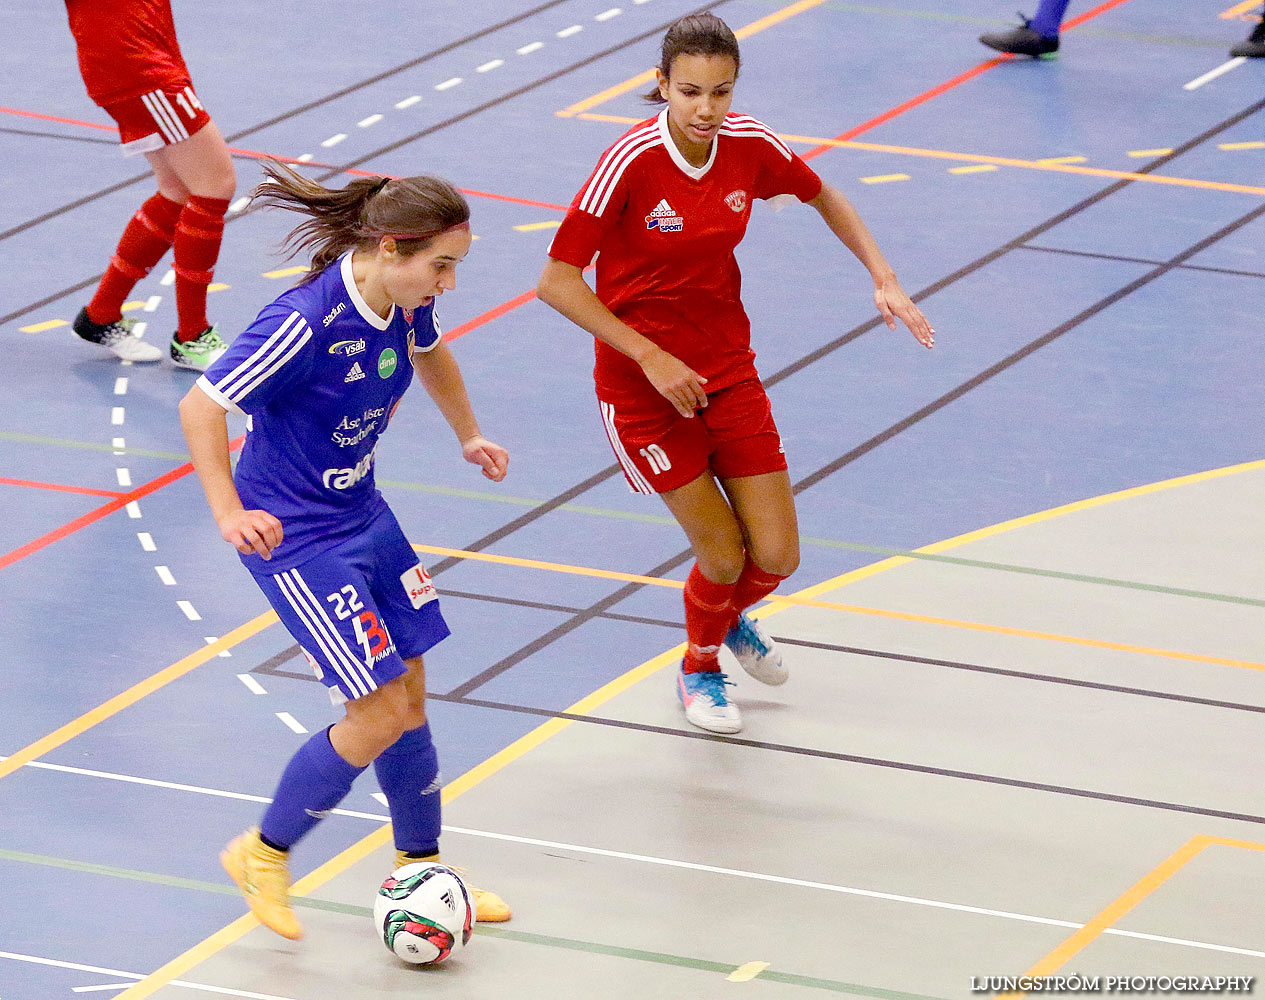 Futsal-DM IK Gauthiod-Bergdalens IK 4-0,dam,Åse-Vistehallen,Grästorp,Sverige,Futsal,,2015,127768